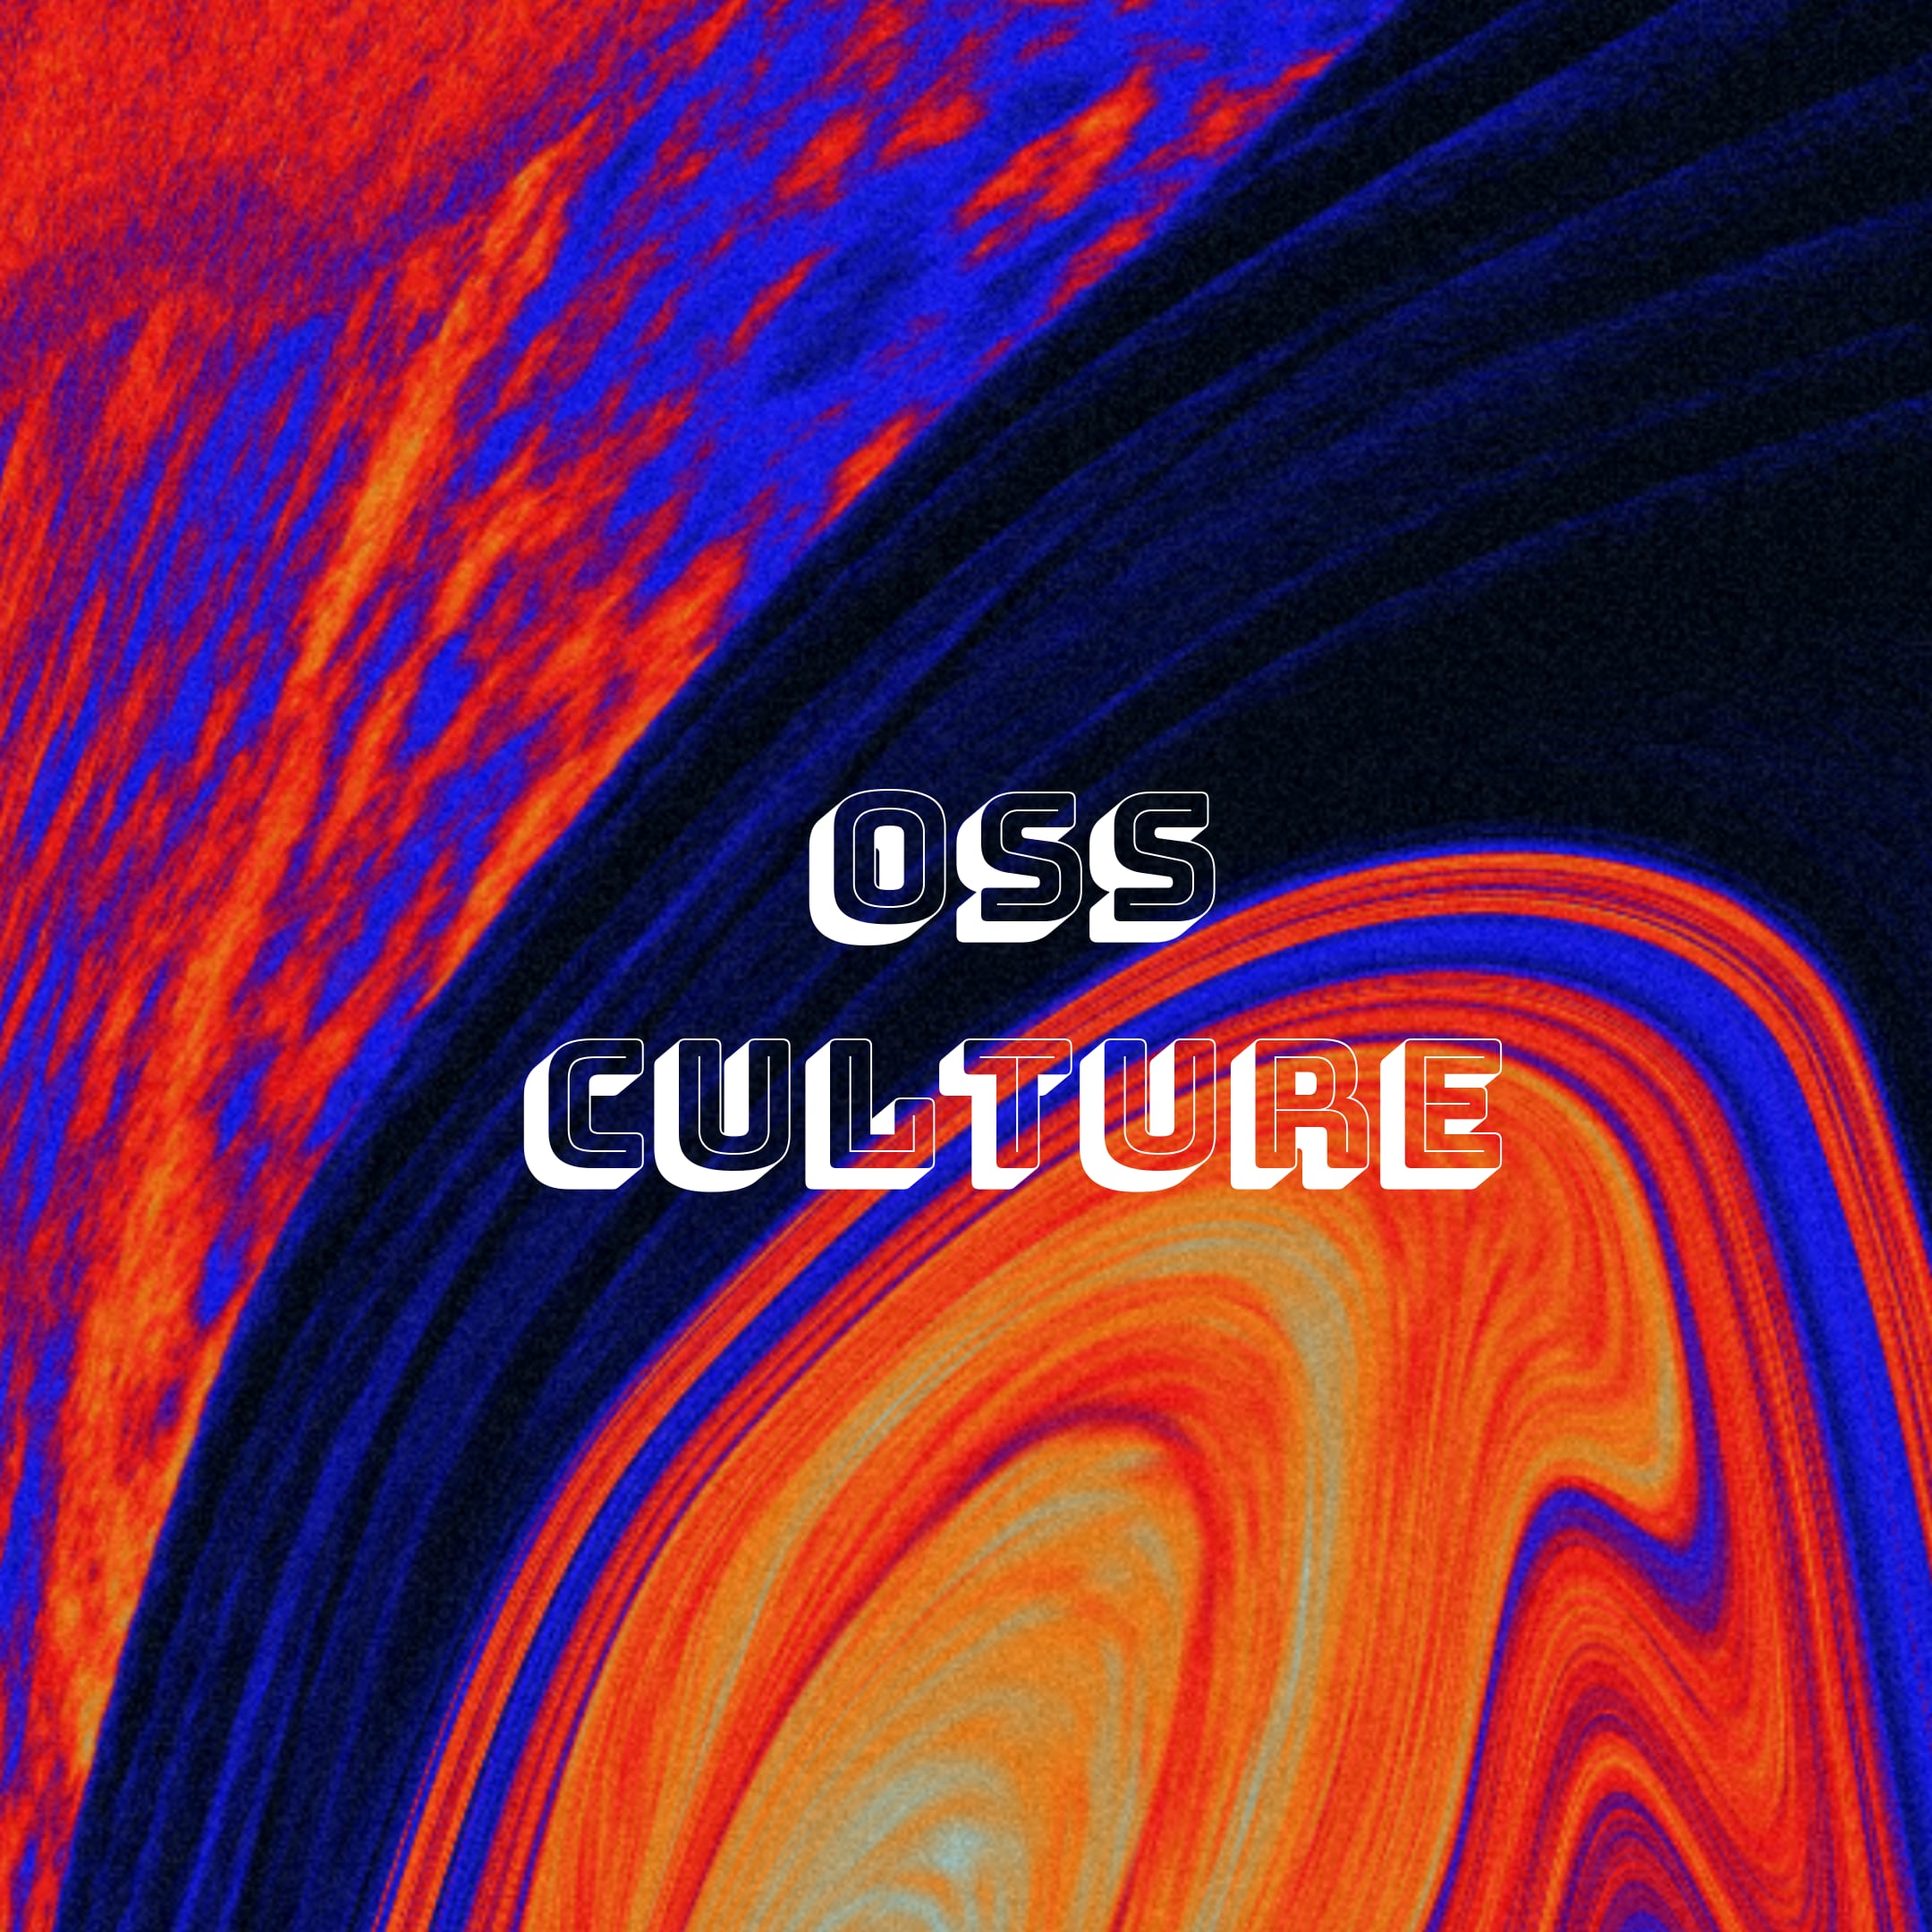 Oss Culture